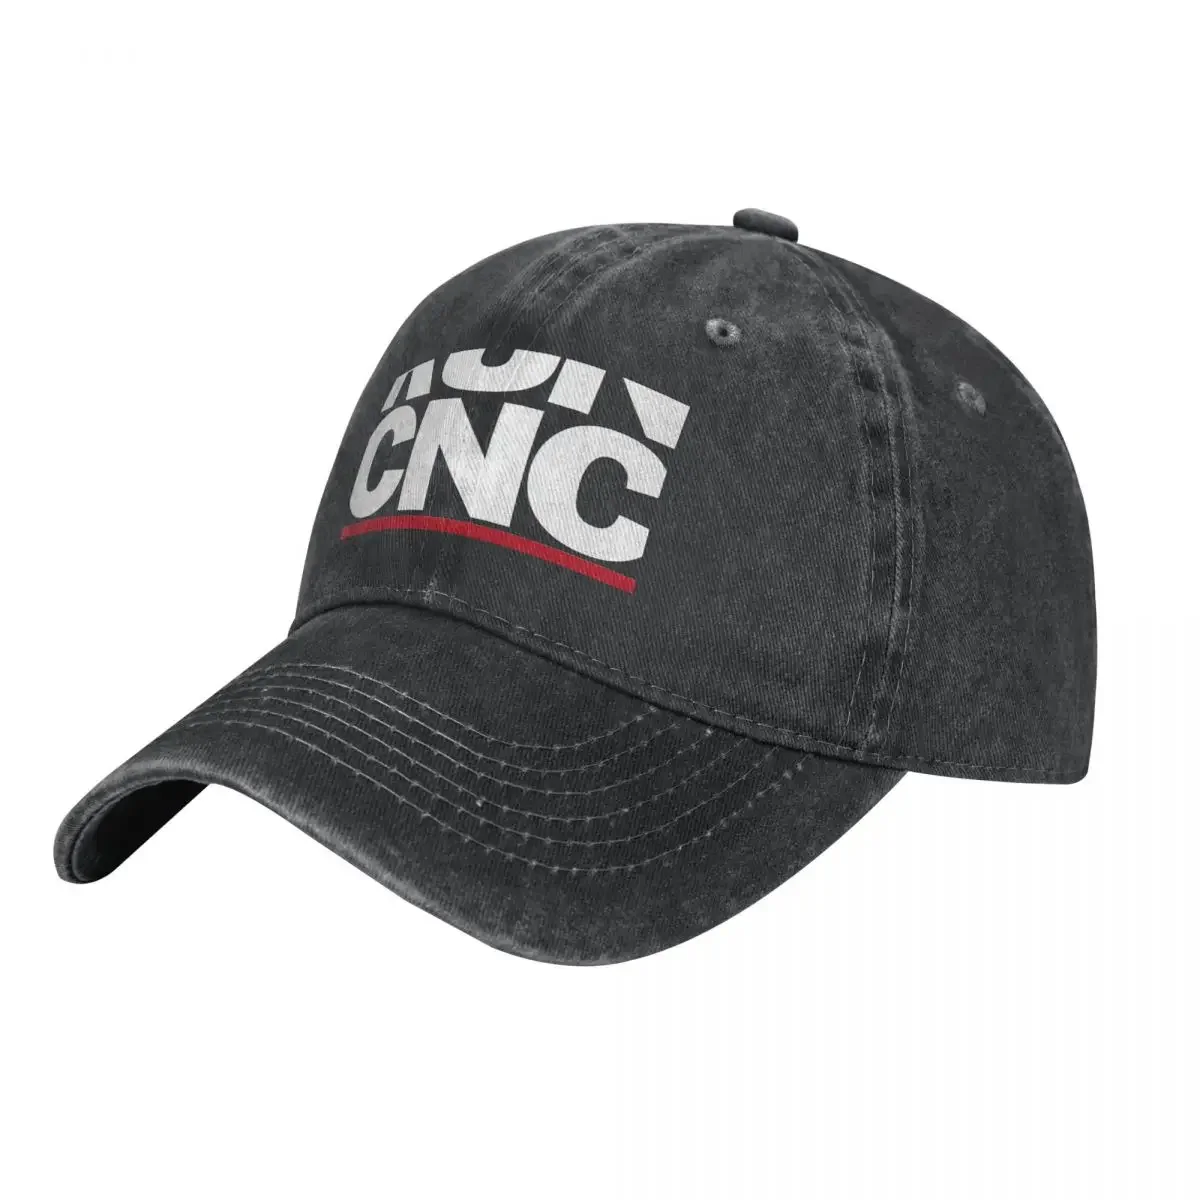 RUN CNC Cowboy Hat Trucker Hat Hat Man Luxury Mens Tennis Women's fashion soft flag of baltimore heart hat gift dad hat trucker hat cowboy hat